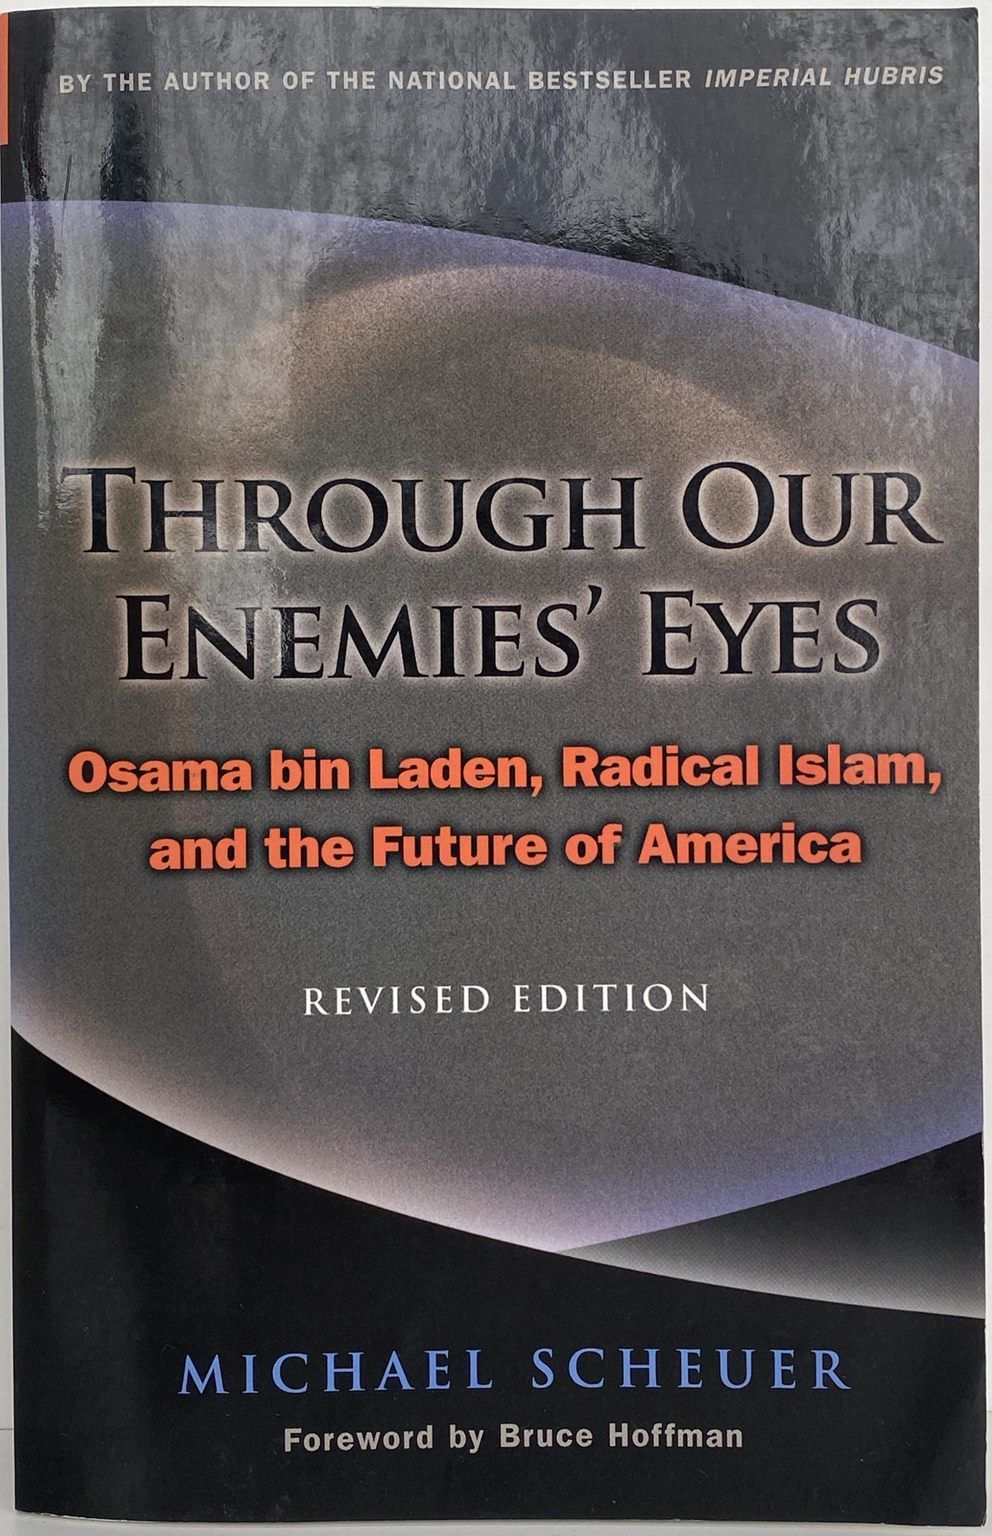 THROUGH OUR EMEMIES EYES: Osama bin Laden, Radical Islam, the future of America